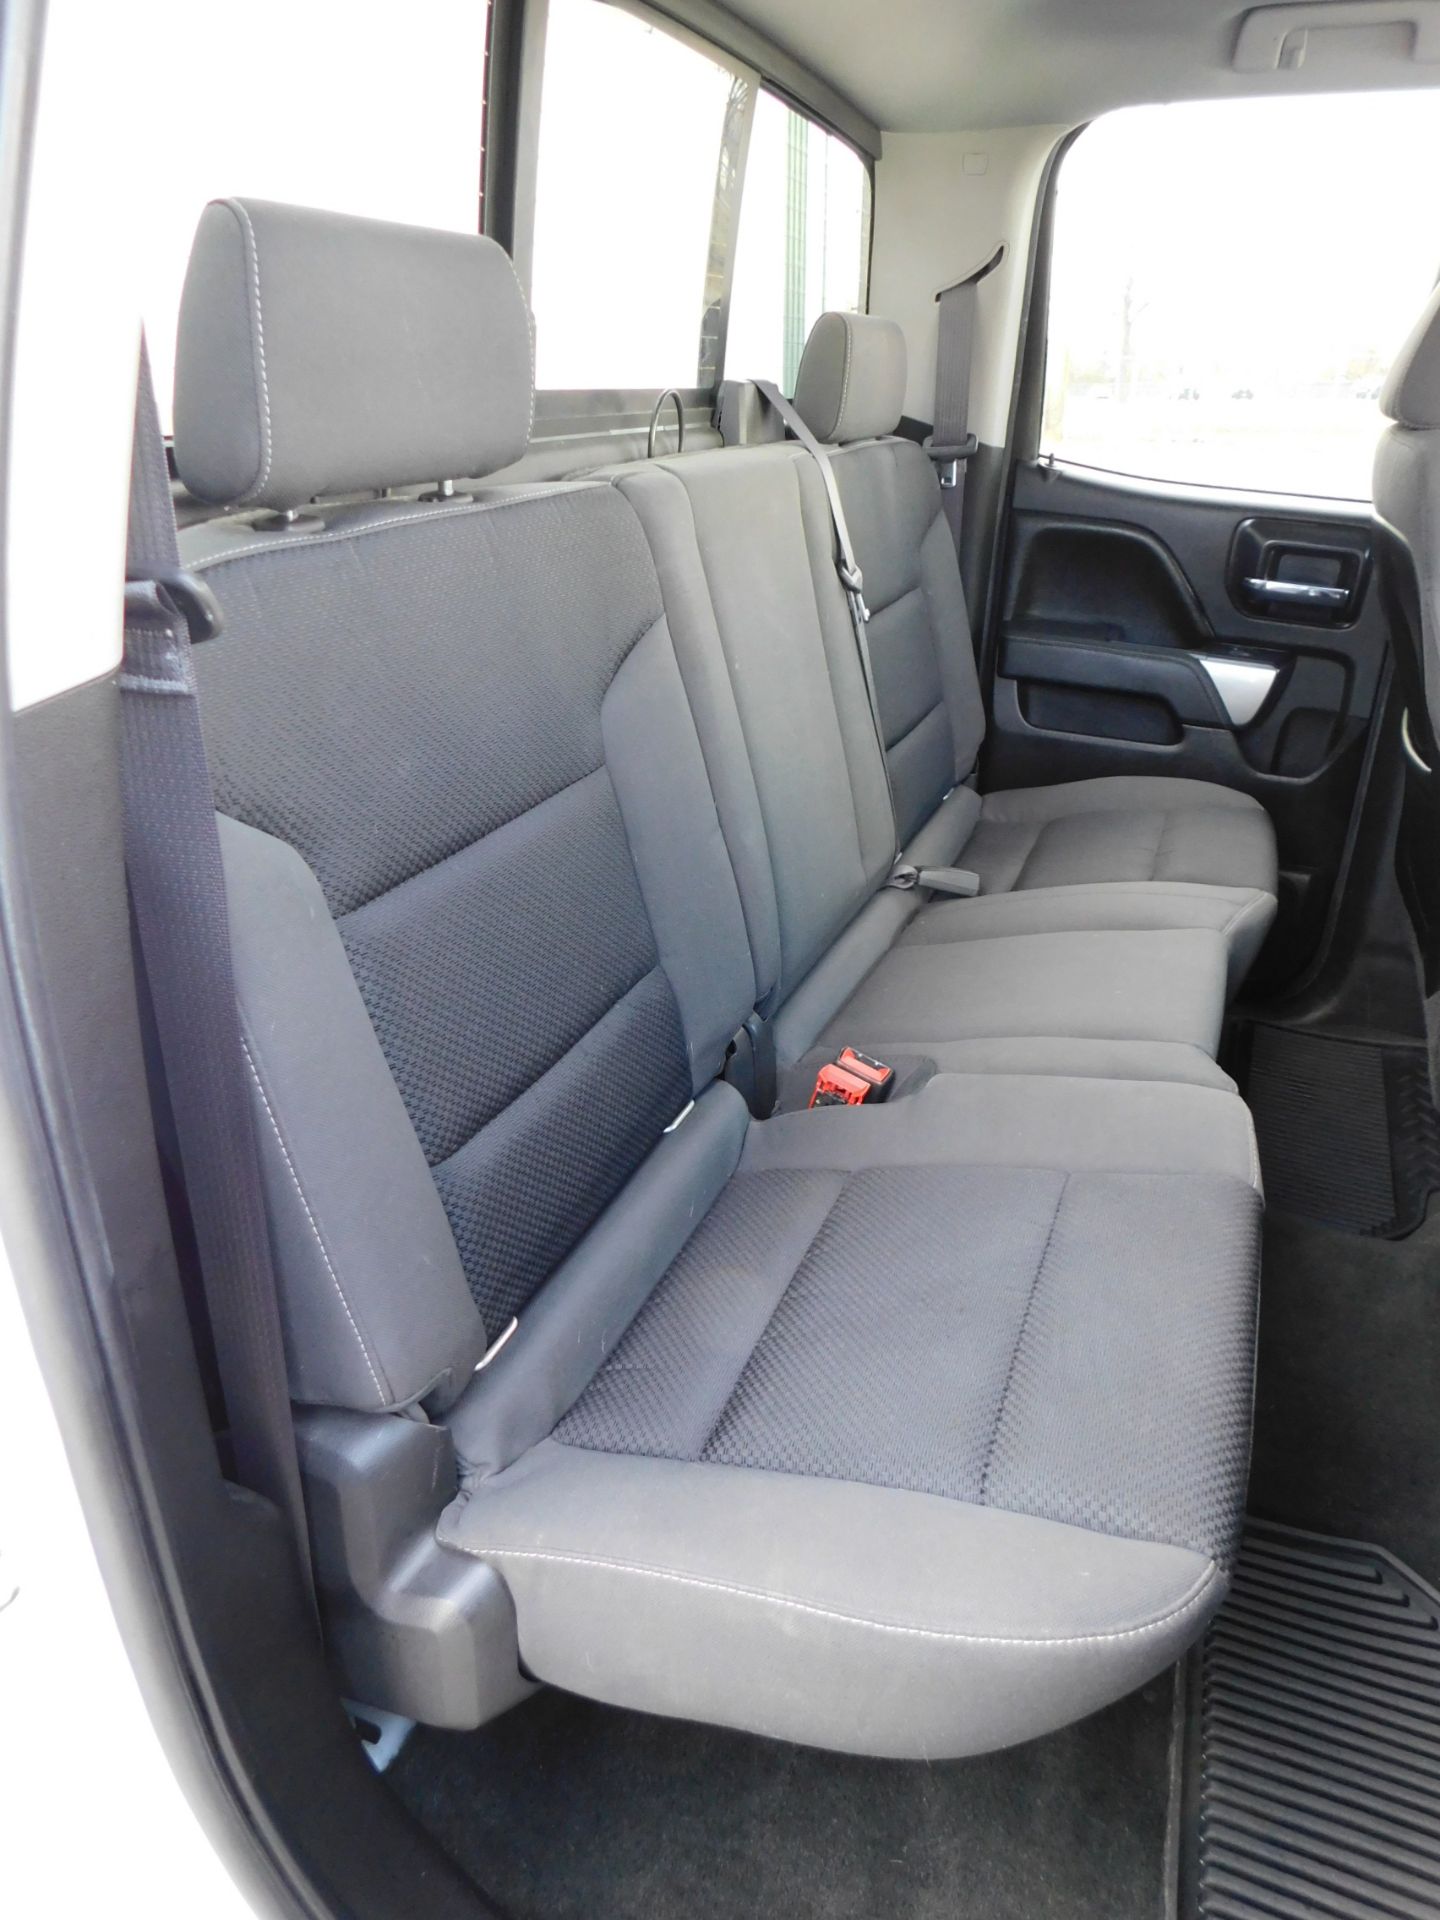 2014 Chevrolet Silverado LT Pickup, VIN 1GCVKREC3EZ139405, 4-Door 4 WD, Automatic, AM/FM, AC, Cruise - Image 38 of 51